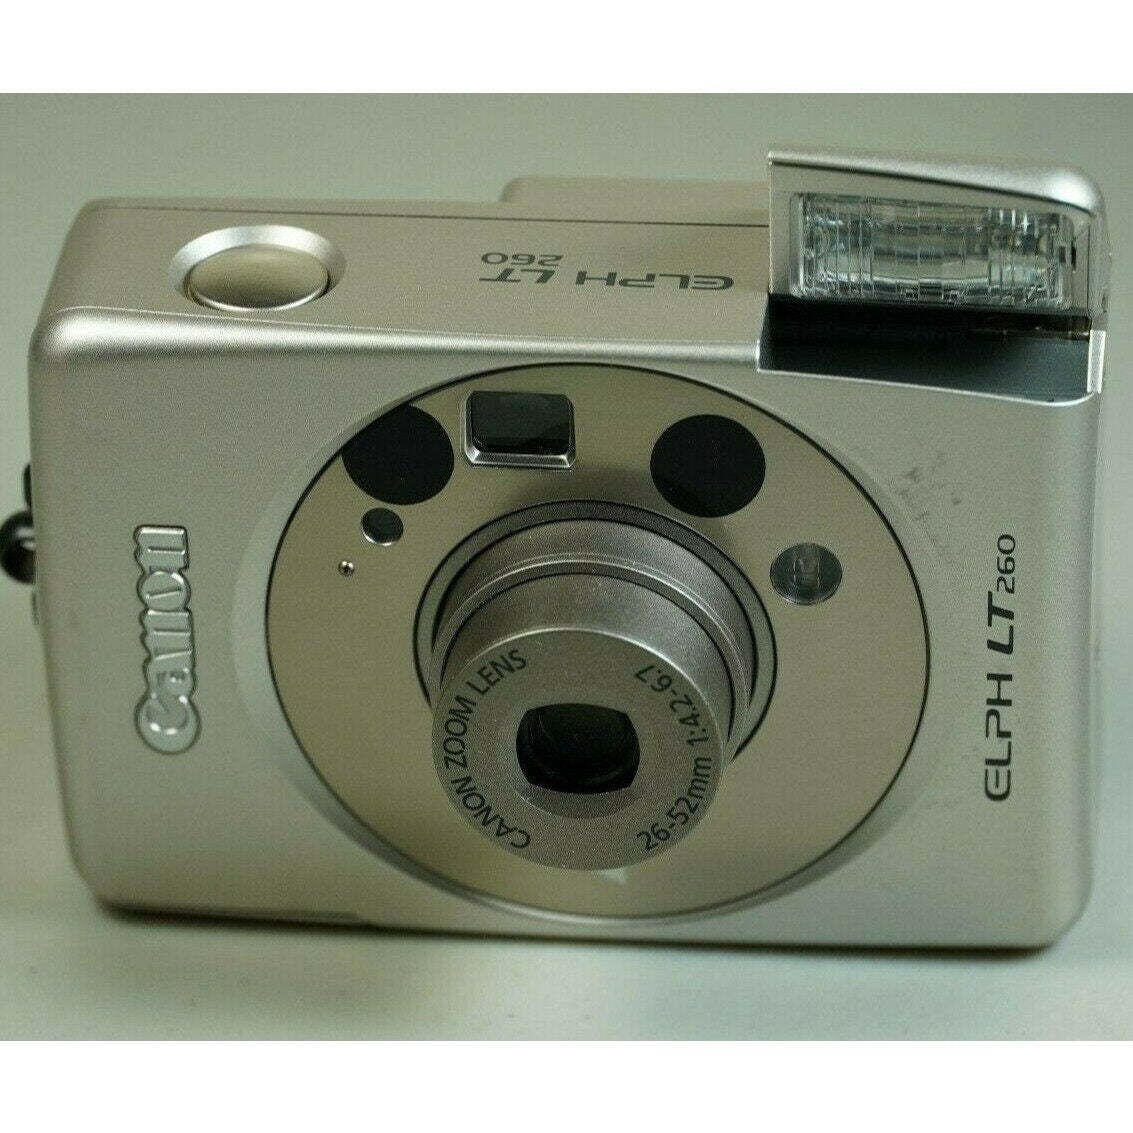 Canon Elph LT 260 APS Point & Shoot Film Camera - $45.00